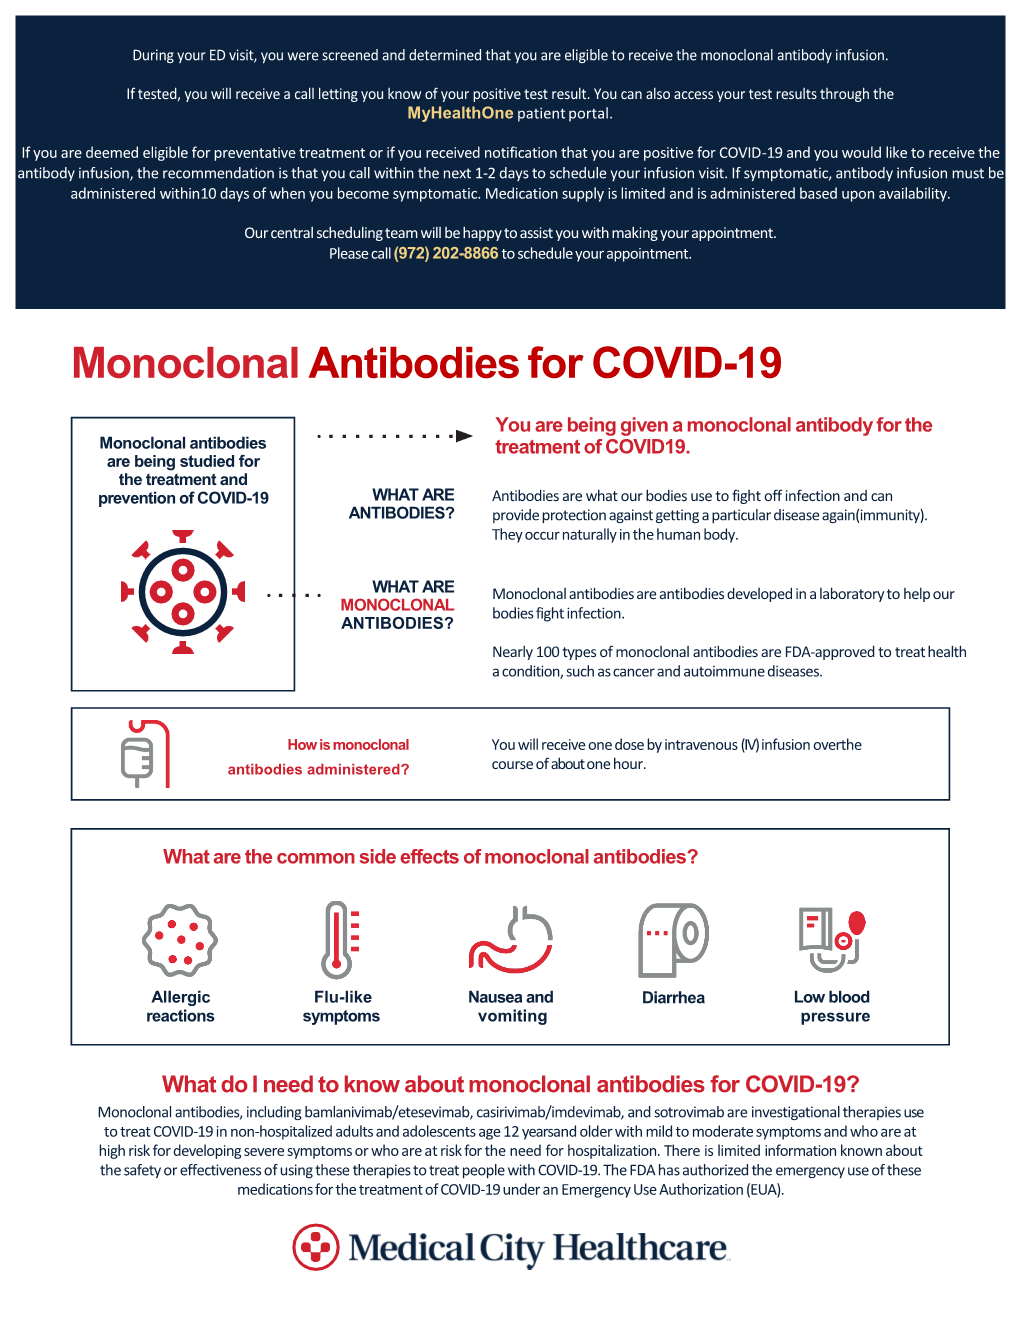 Monoclonal Antibodies for COVID-19